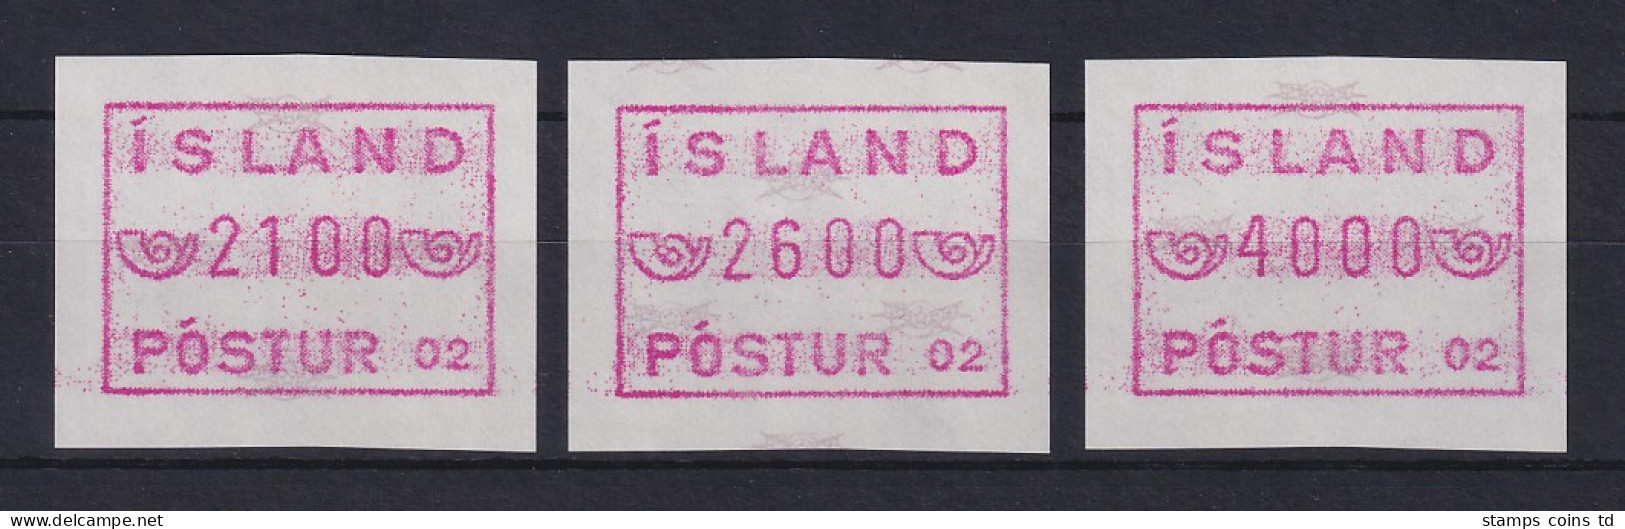 Island Frama-ATM  Aut.-Nr. 02, Mi.-Nr. 1.2 D Satz 2100-2600-4000 ** (1989) - Automatenmarken (Frama)